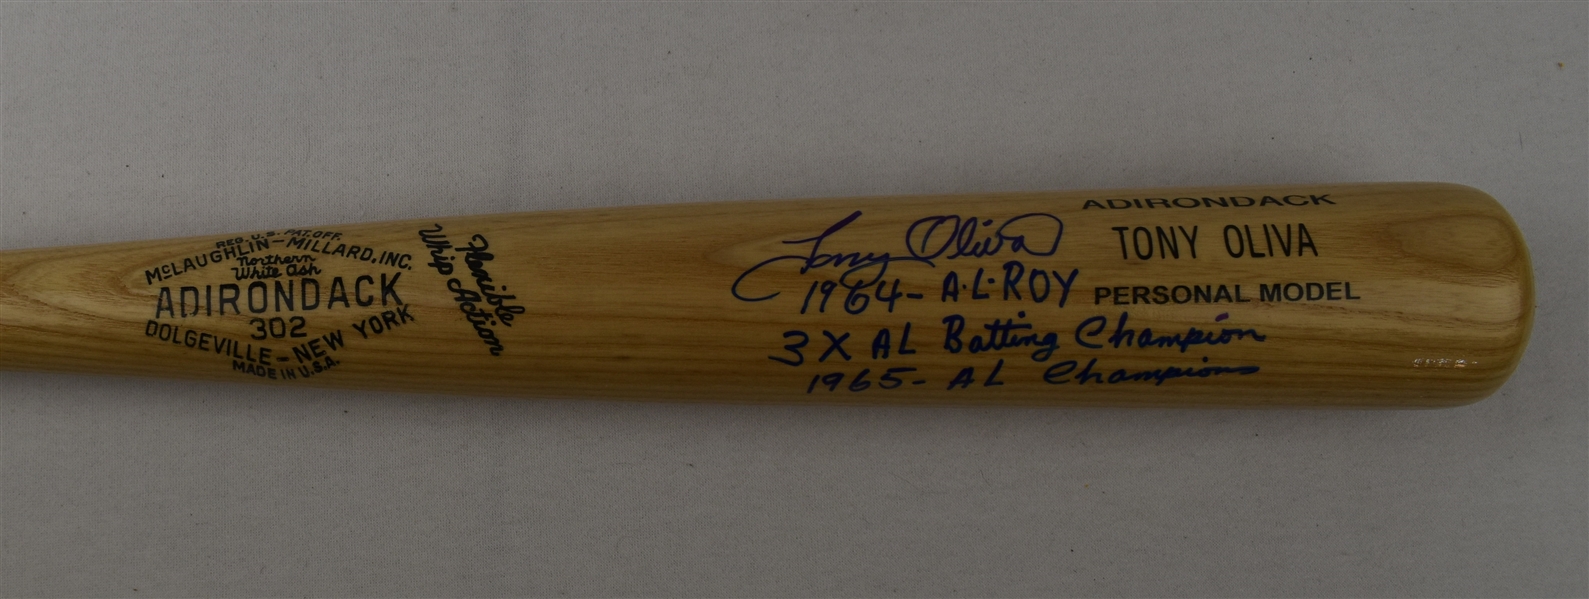 Tony Oliva Autographed & Inscribed Bat